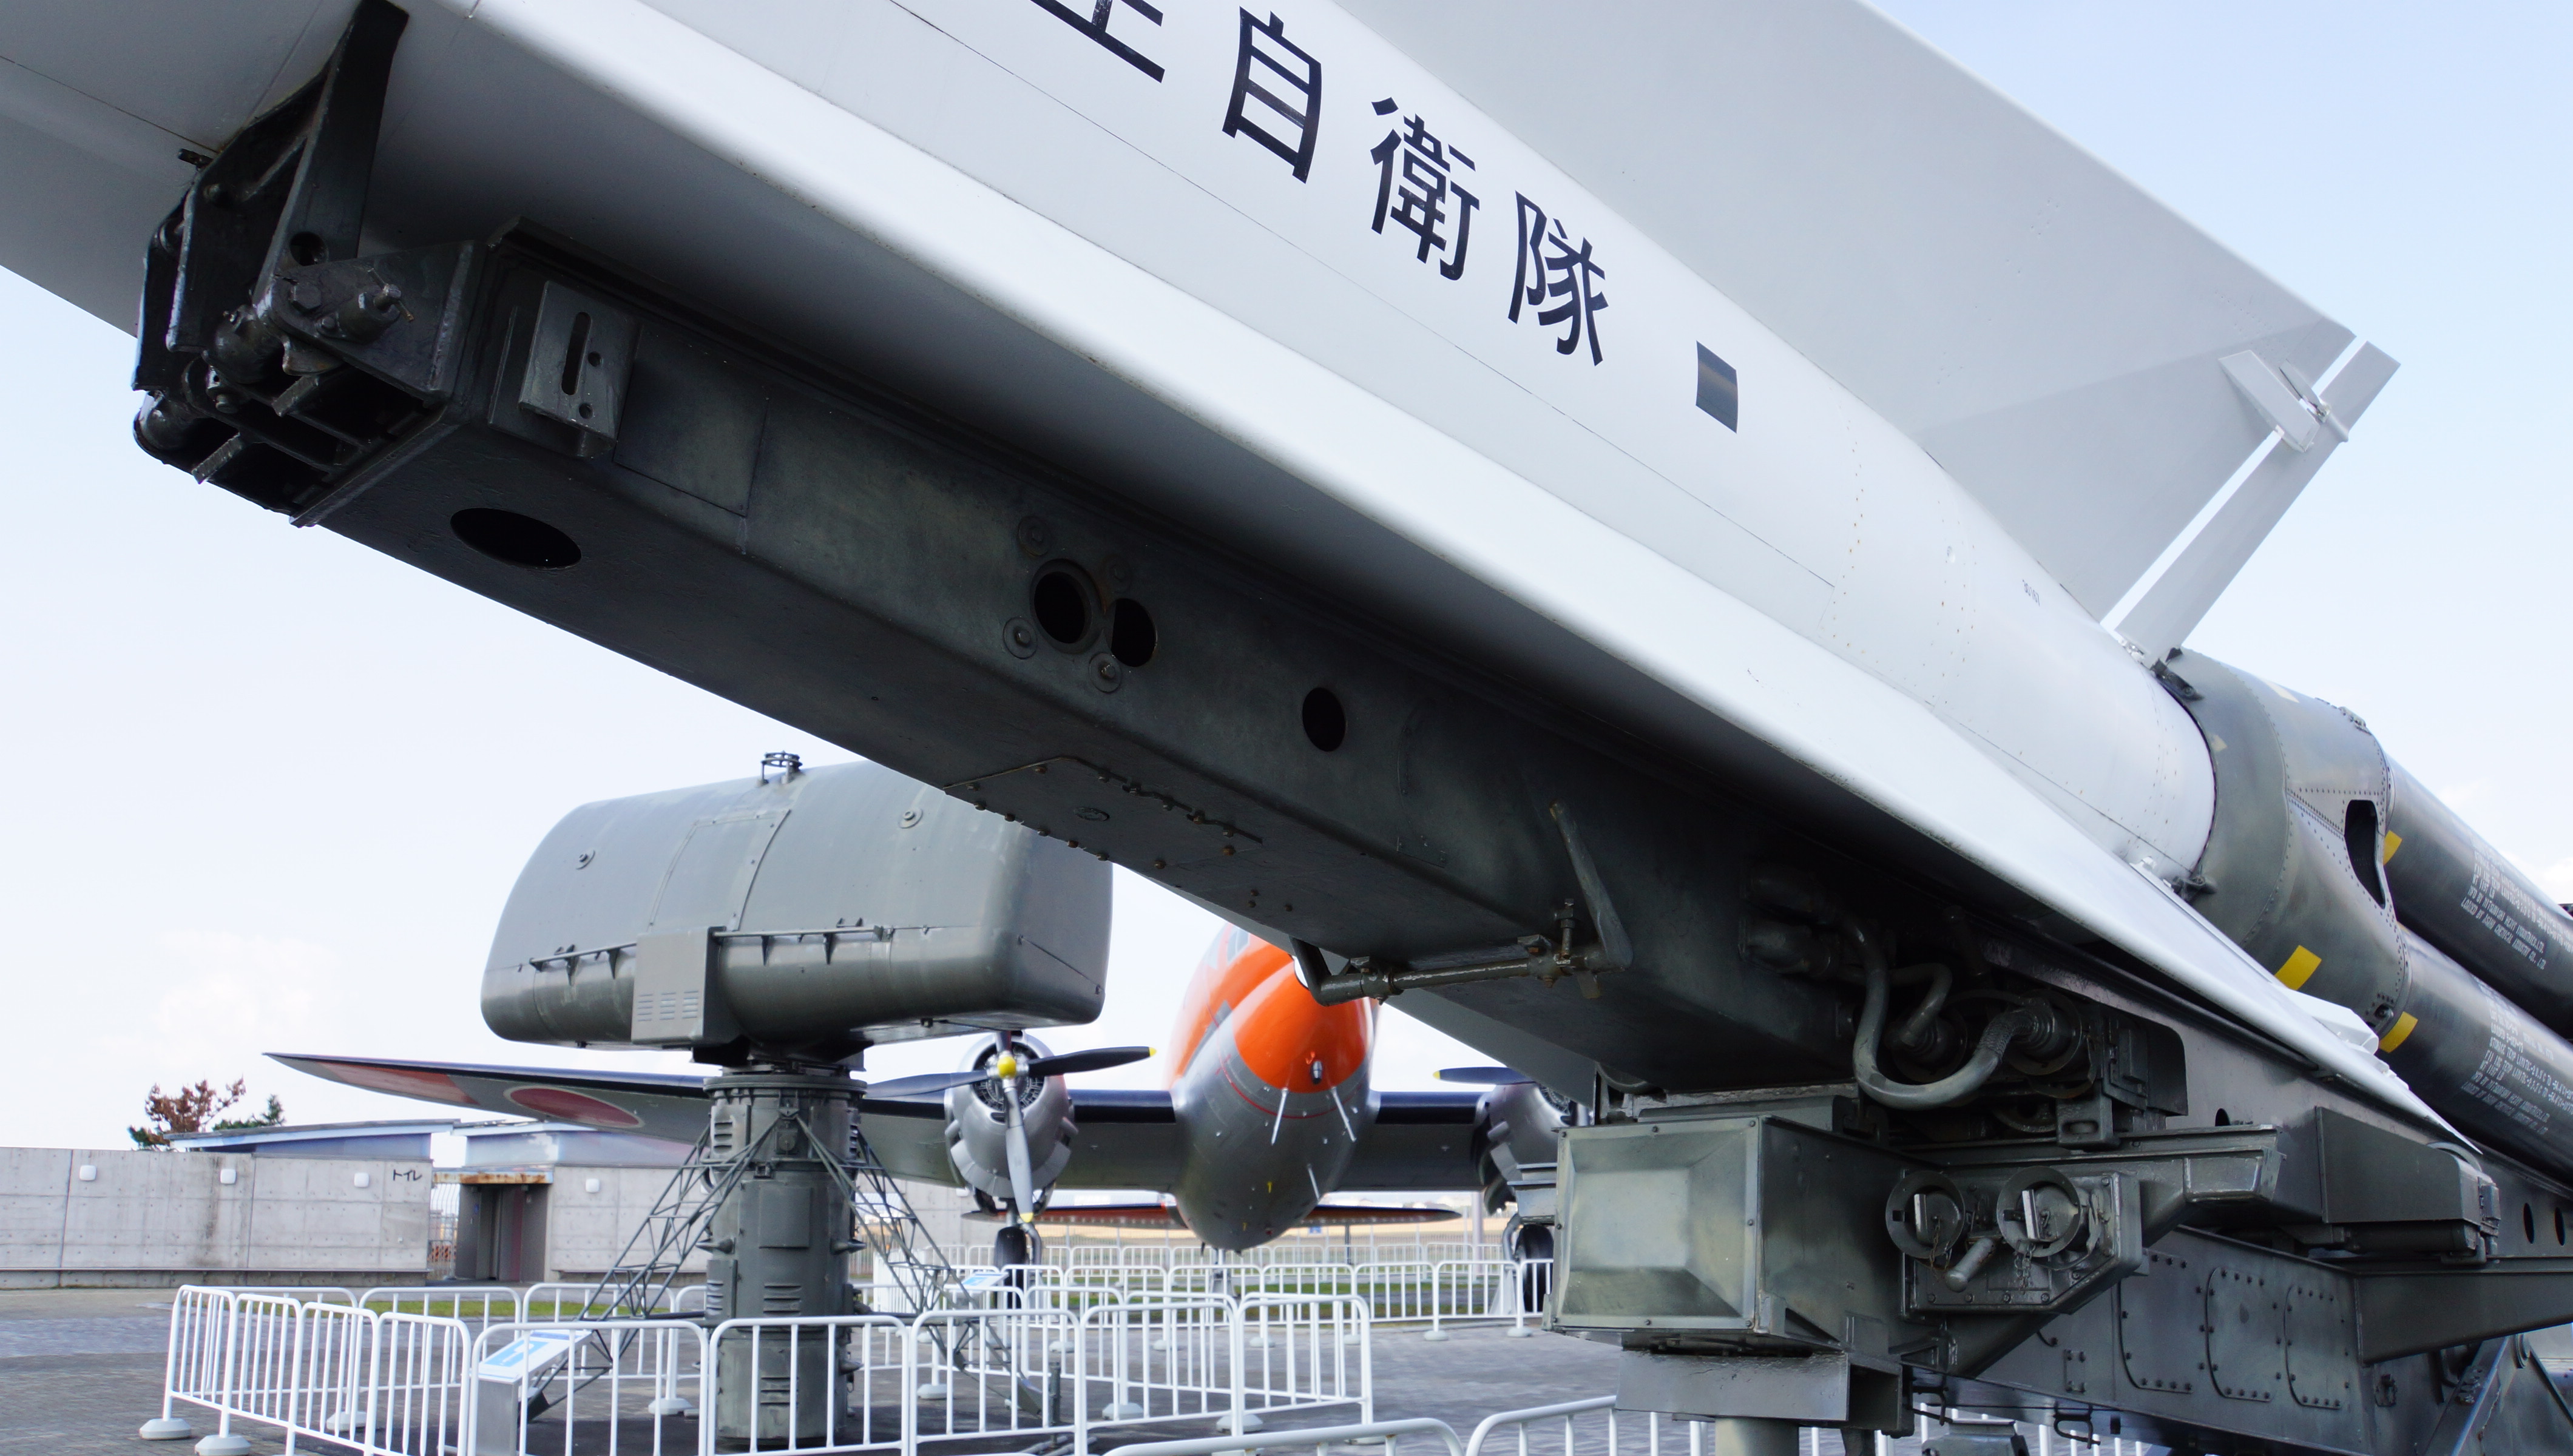 File:JASDF Nike-J missile launcher launching rail left front at Hamamatsu Air Base Publication Center November 24, 2014.jpg - Wikimedia